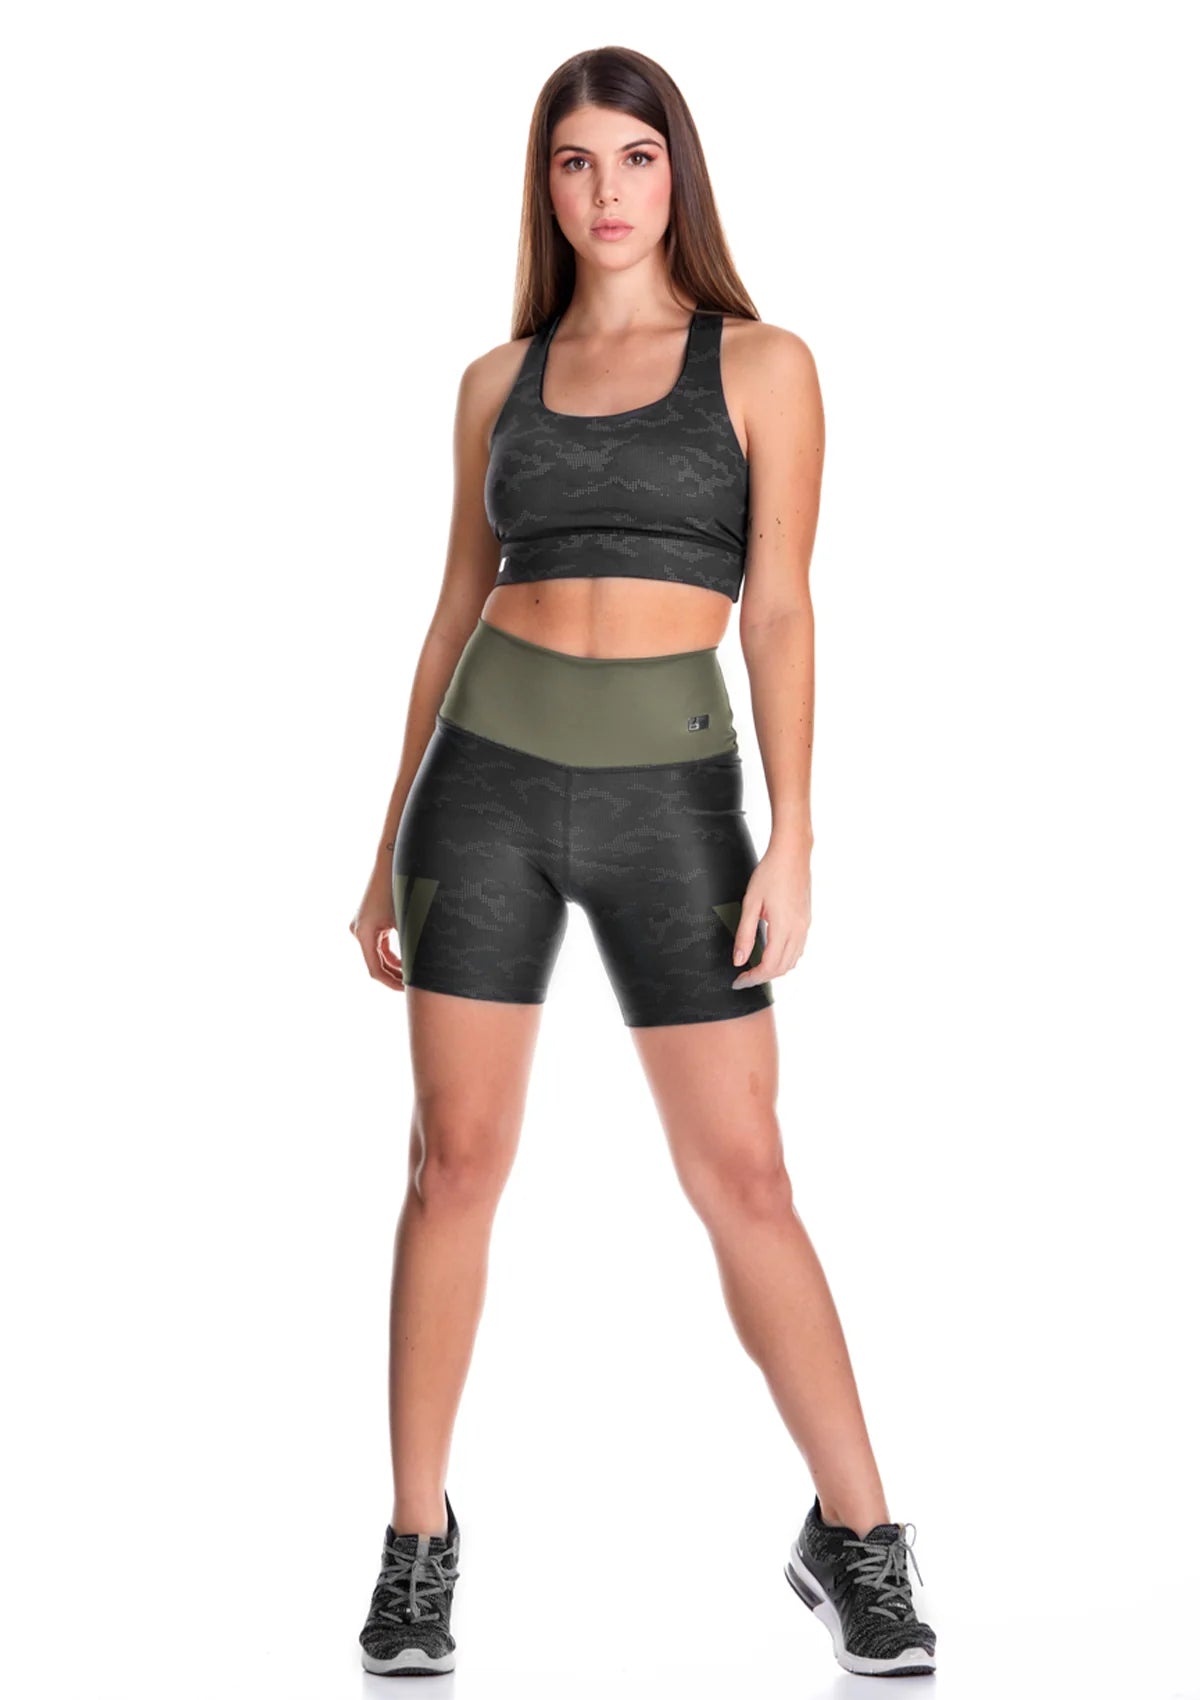 Leggings - Camouflage Black - Running - Yoga Pants - Fitness - Gym